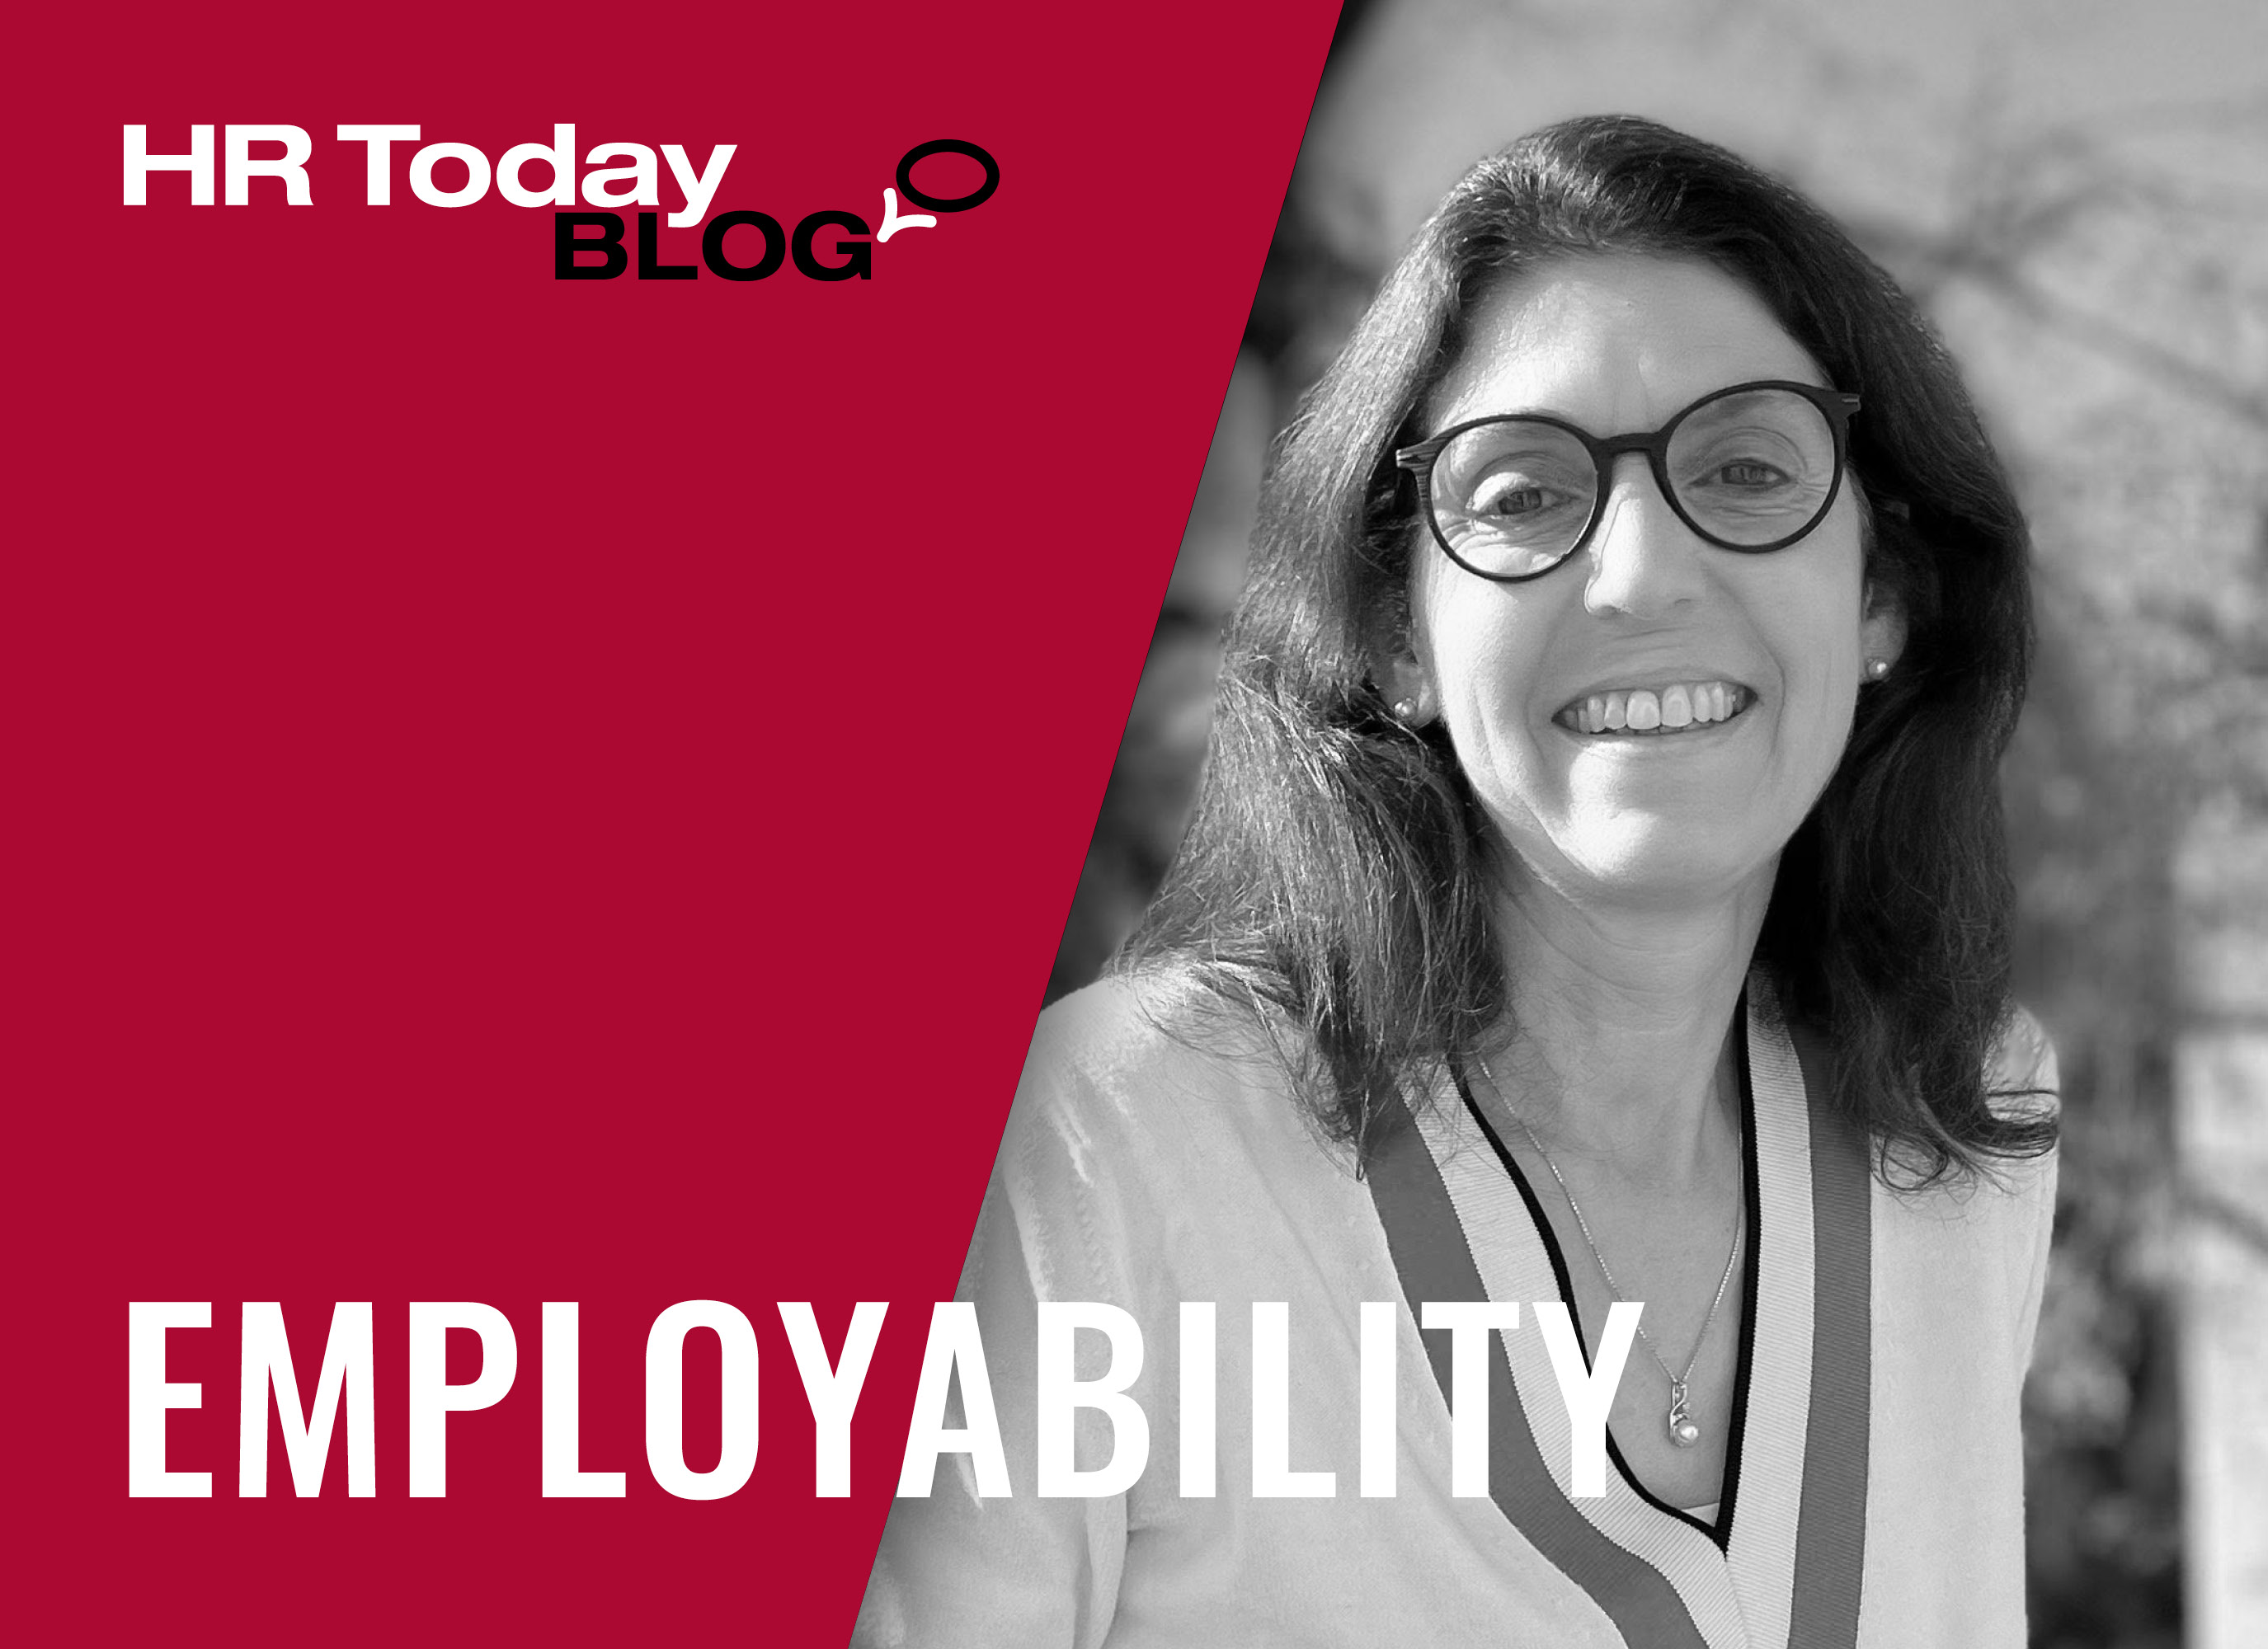 HR Today Blog: Employability